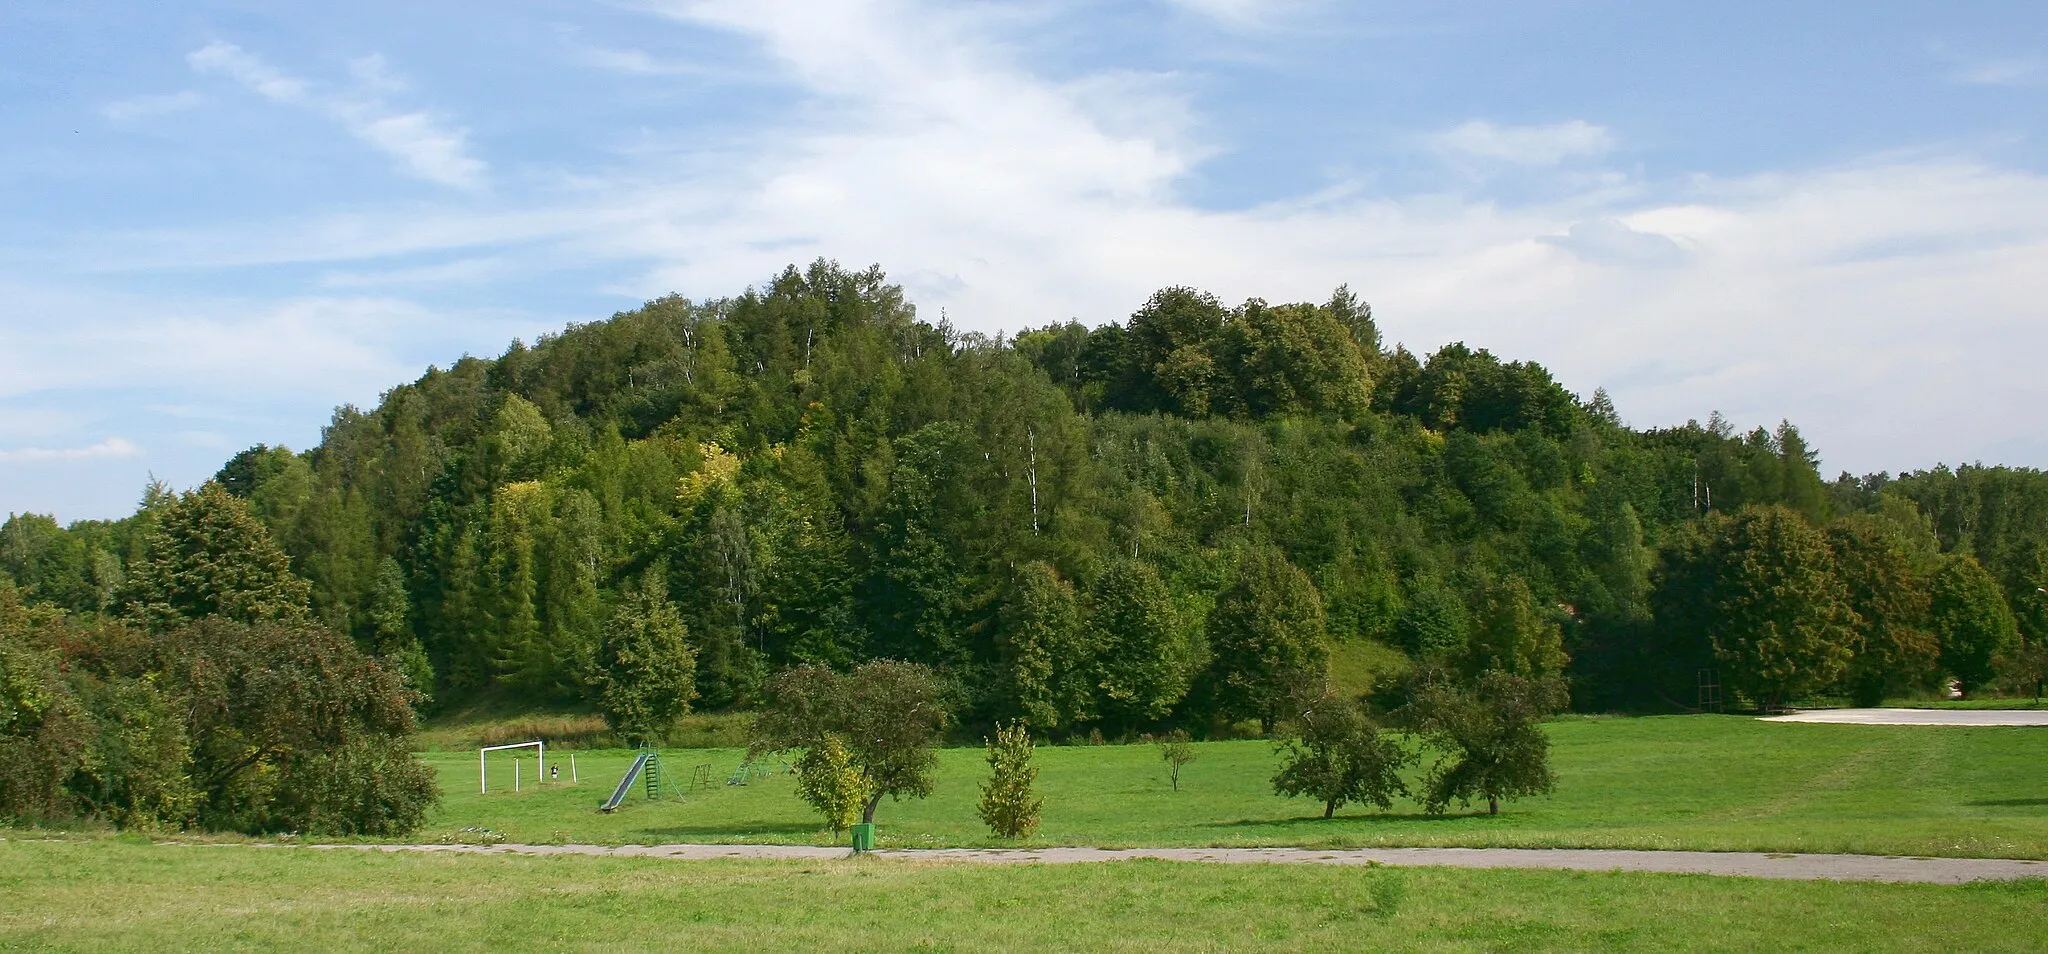 Photo showing: The Kościuszko Mound